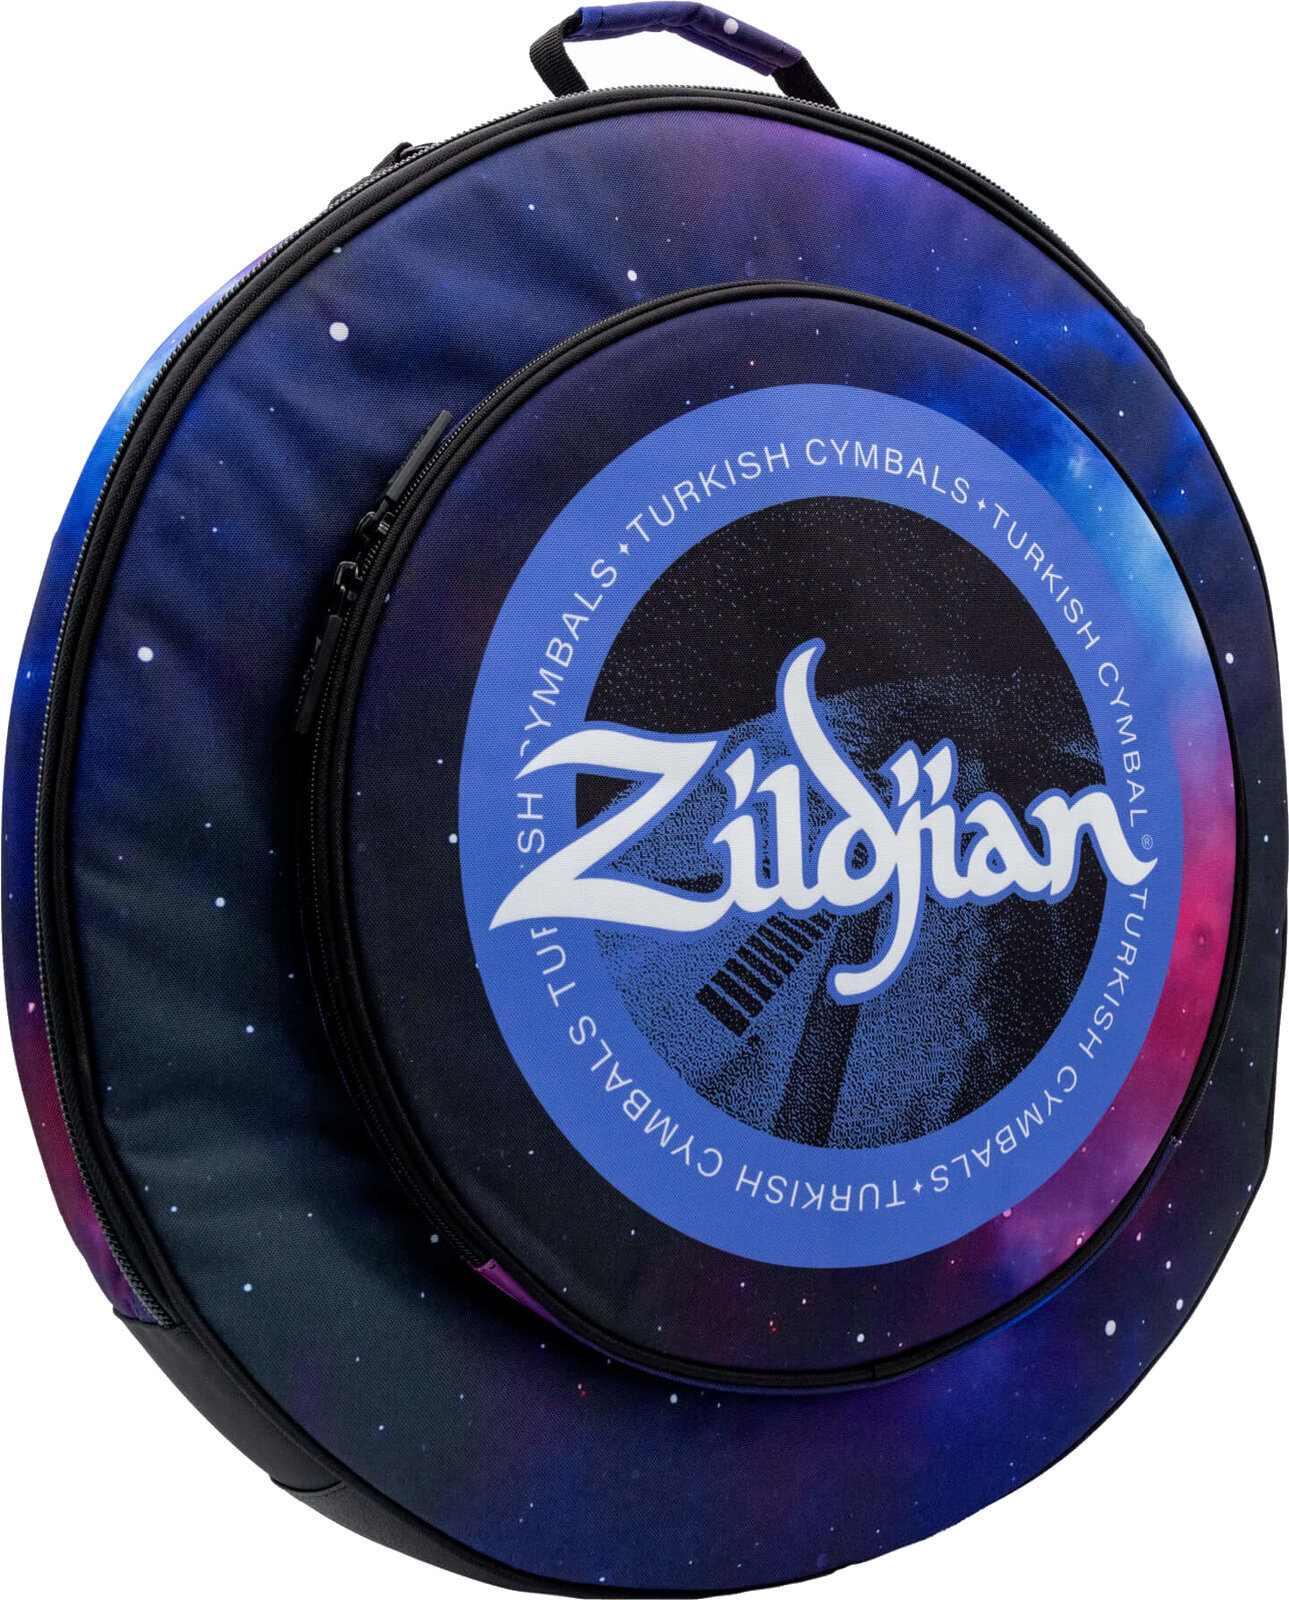 Housse pour cymbale Zildjian 20" Student Cymbal Bag Purple Galaxy Housse pour cymbale